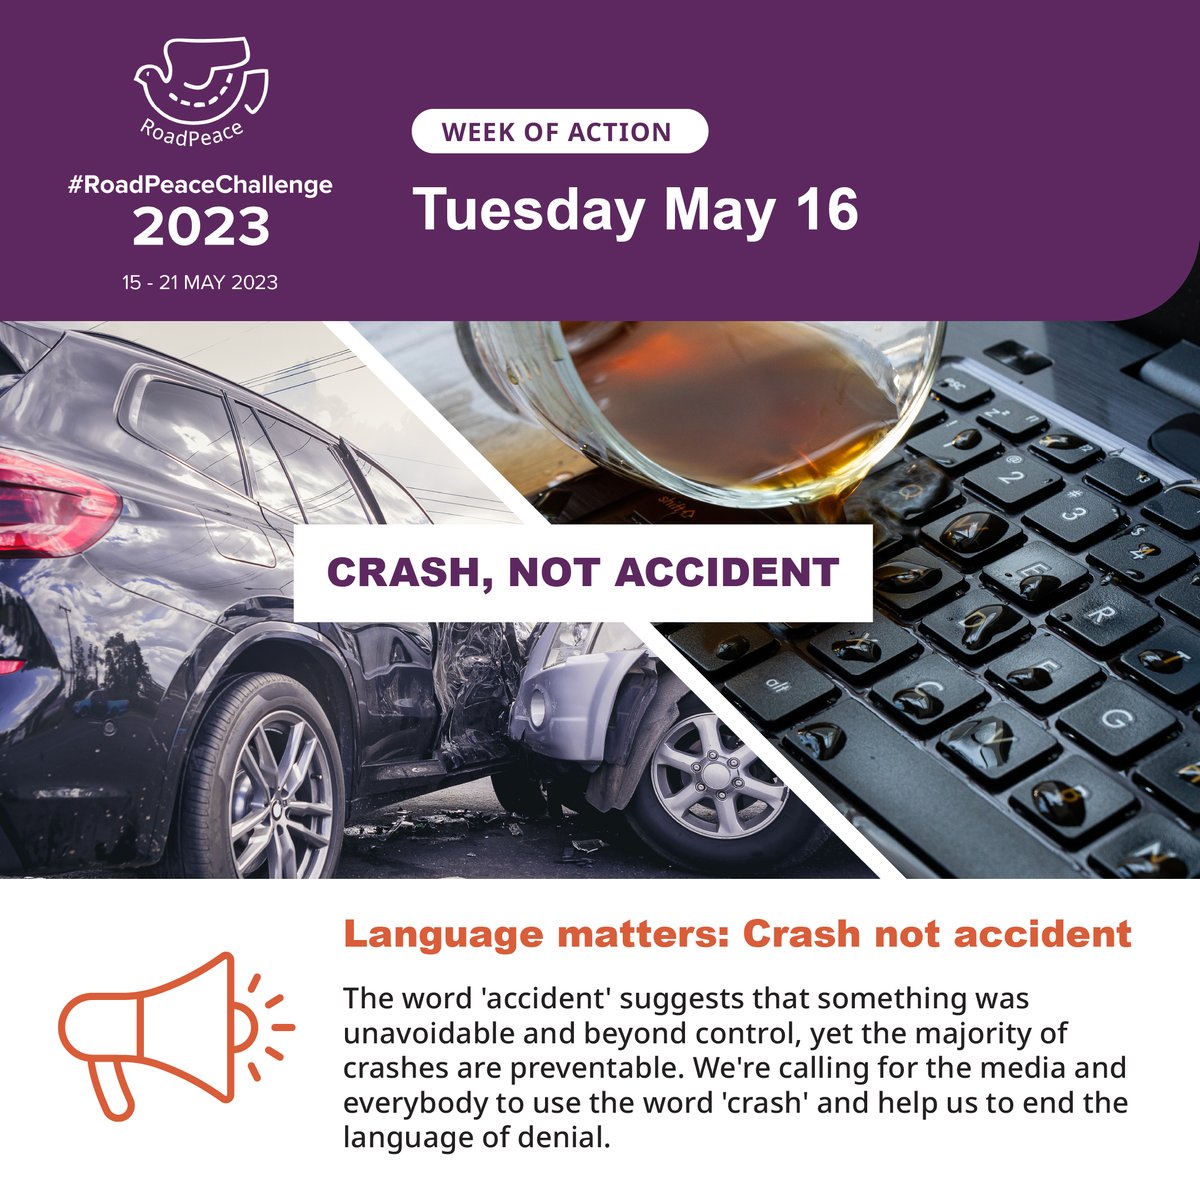 #RoadPeaceChallenge #CrashNotAccident justgiving.com/campaign/roadp… @CCJoShiner